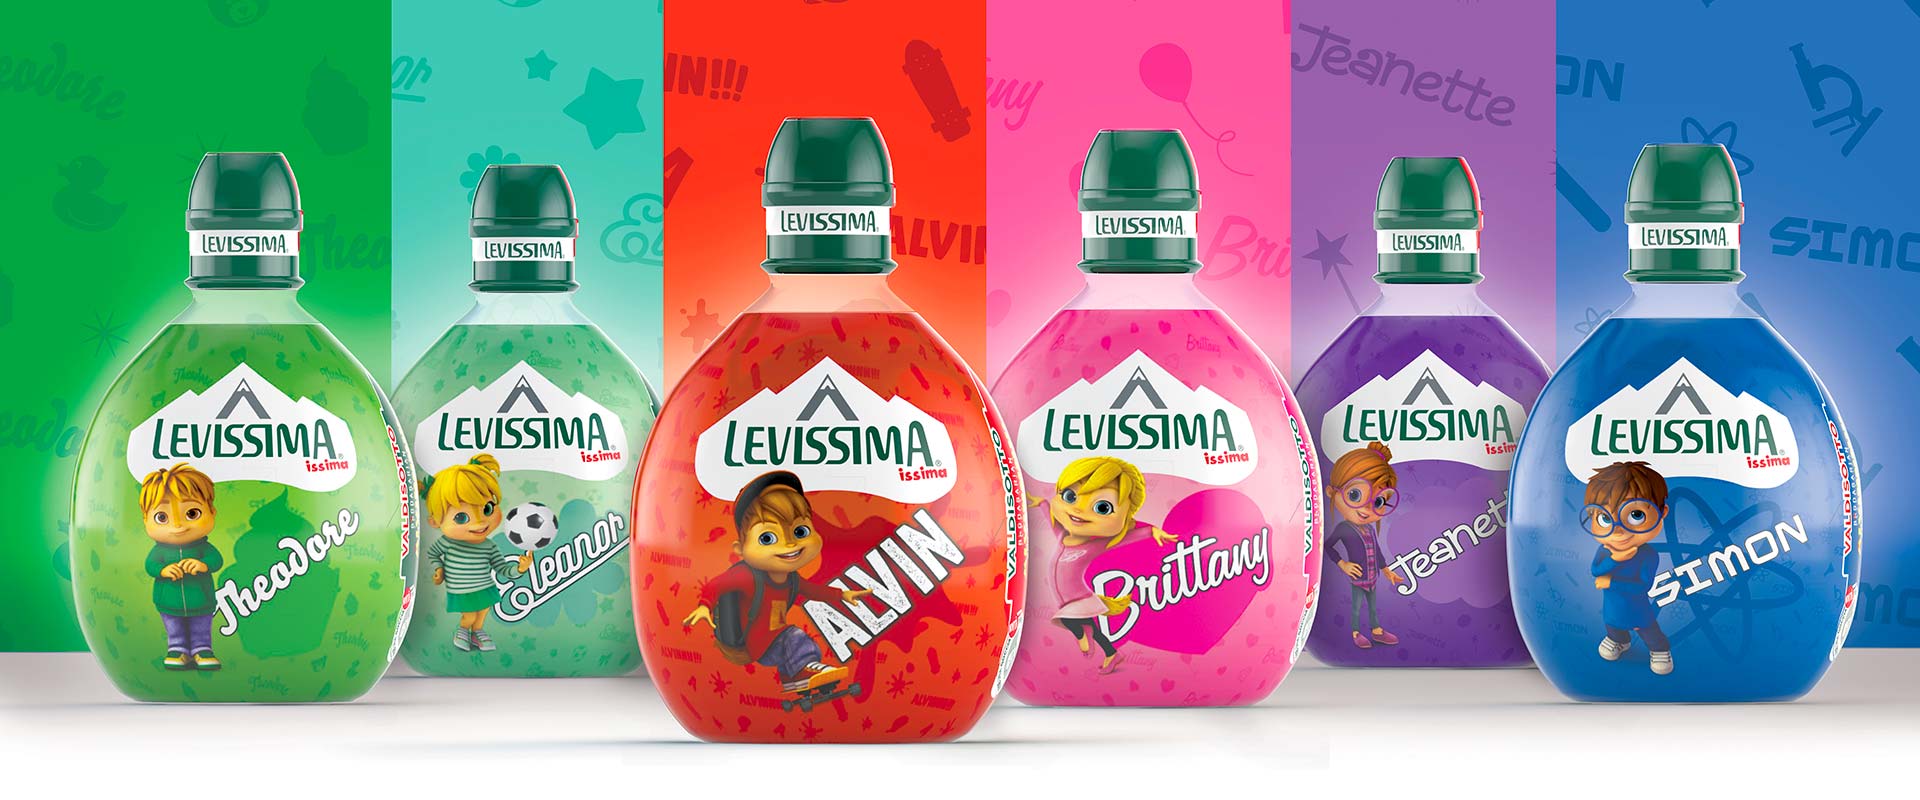 Un carousel dei packaging licensing creati da ATC per Levissima Issima